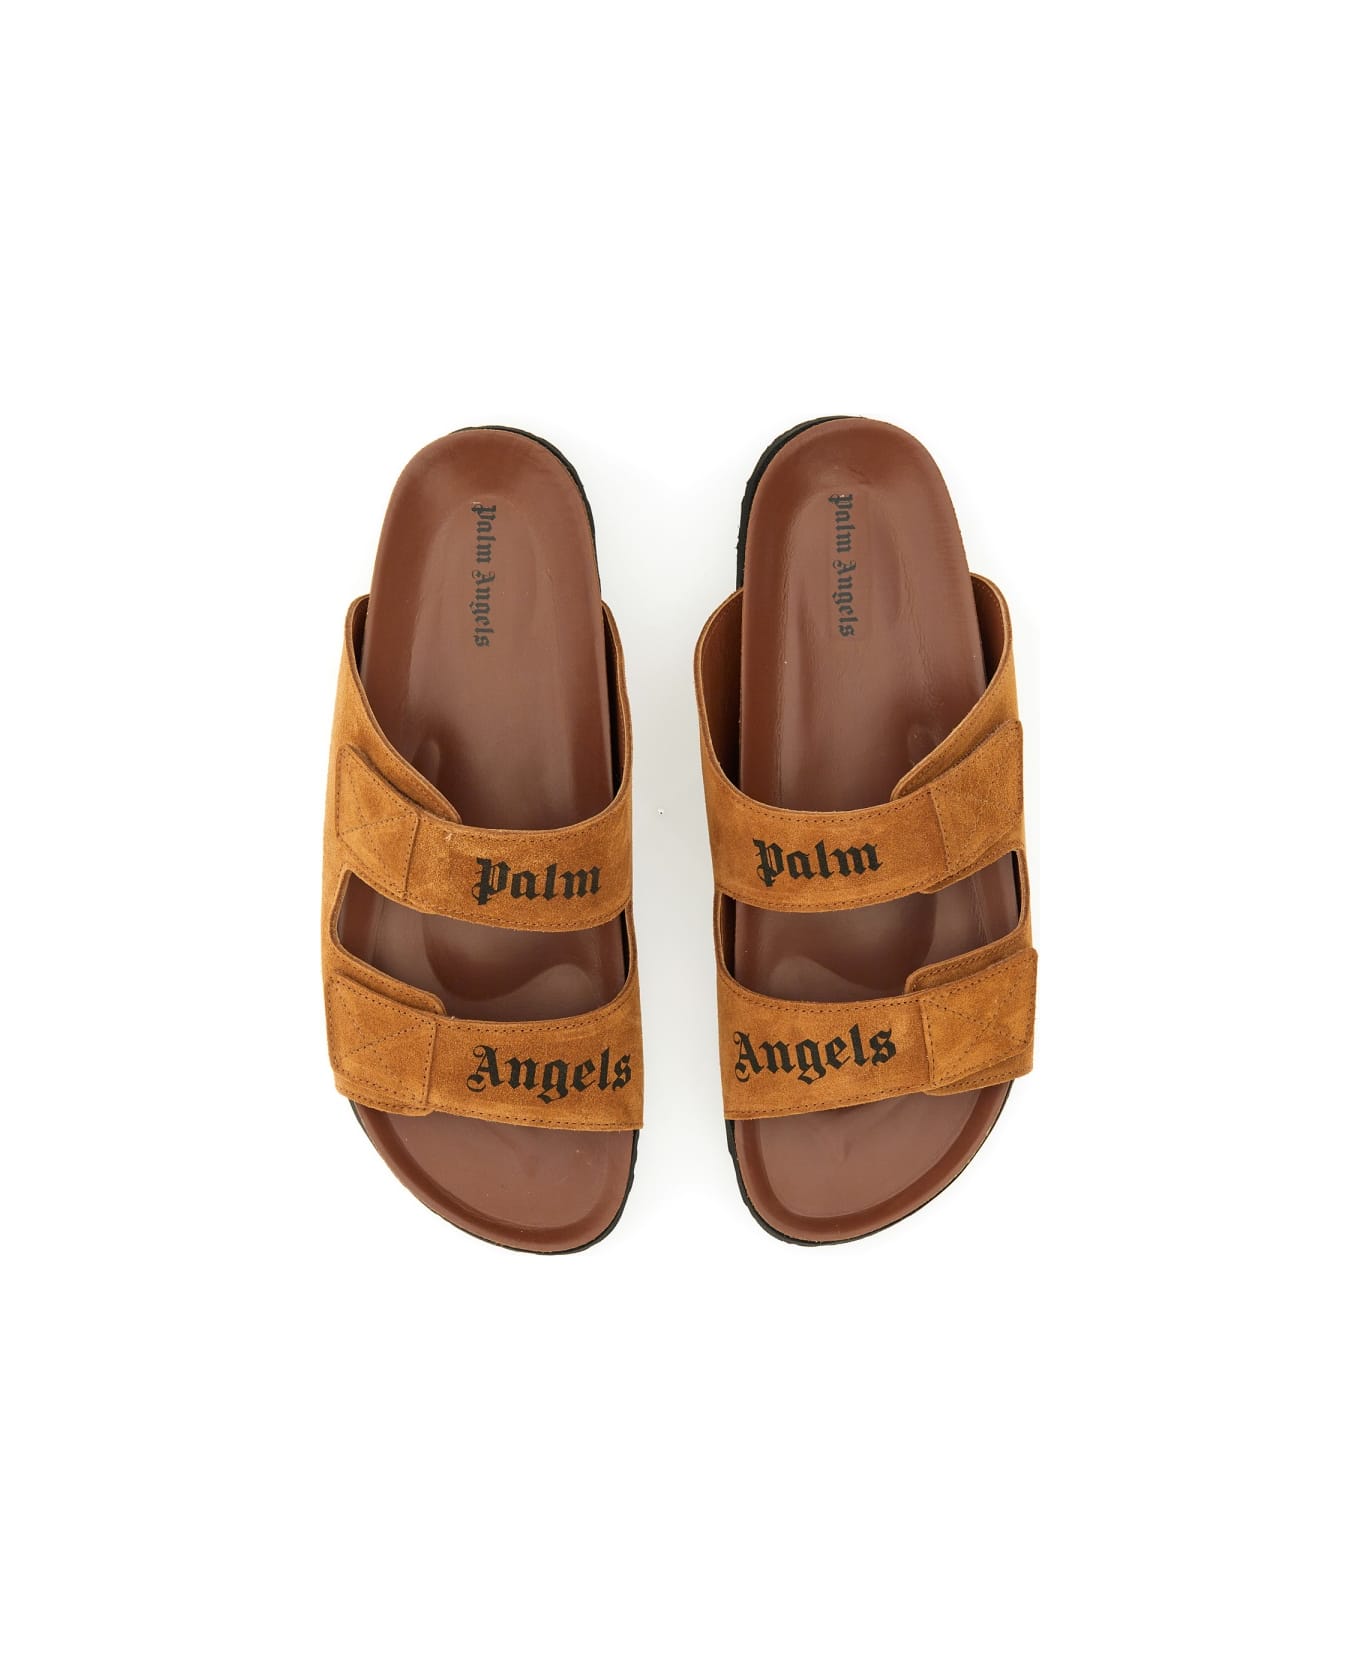 Palm Angels Leather Sandal - BEIGE